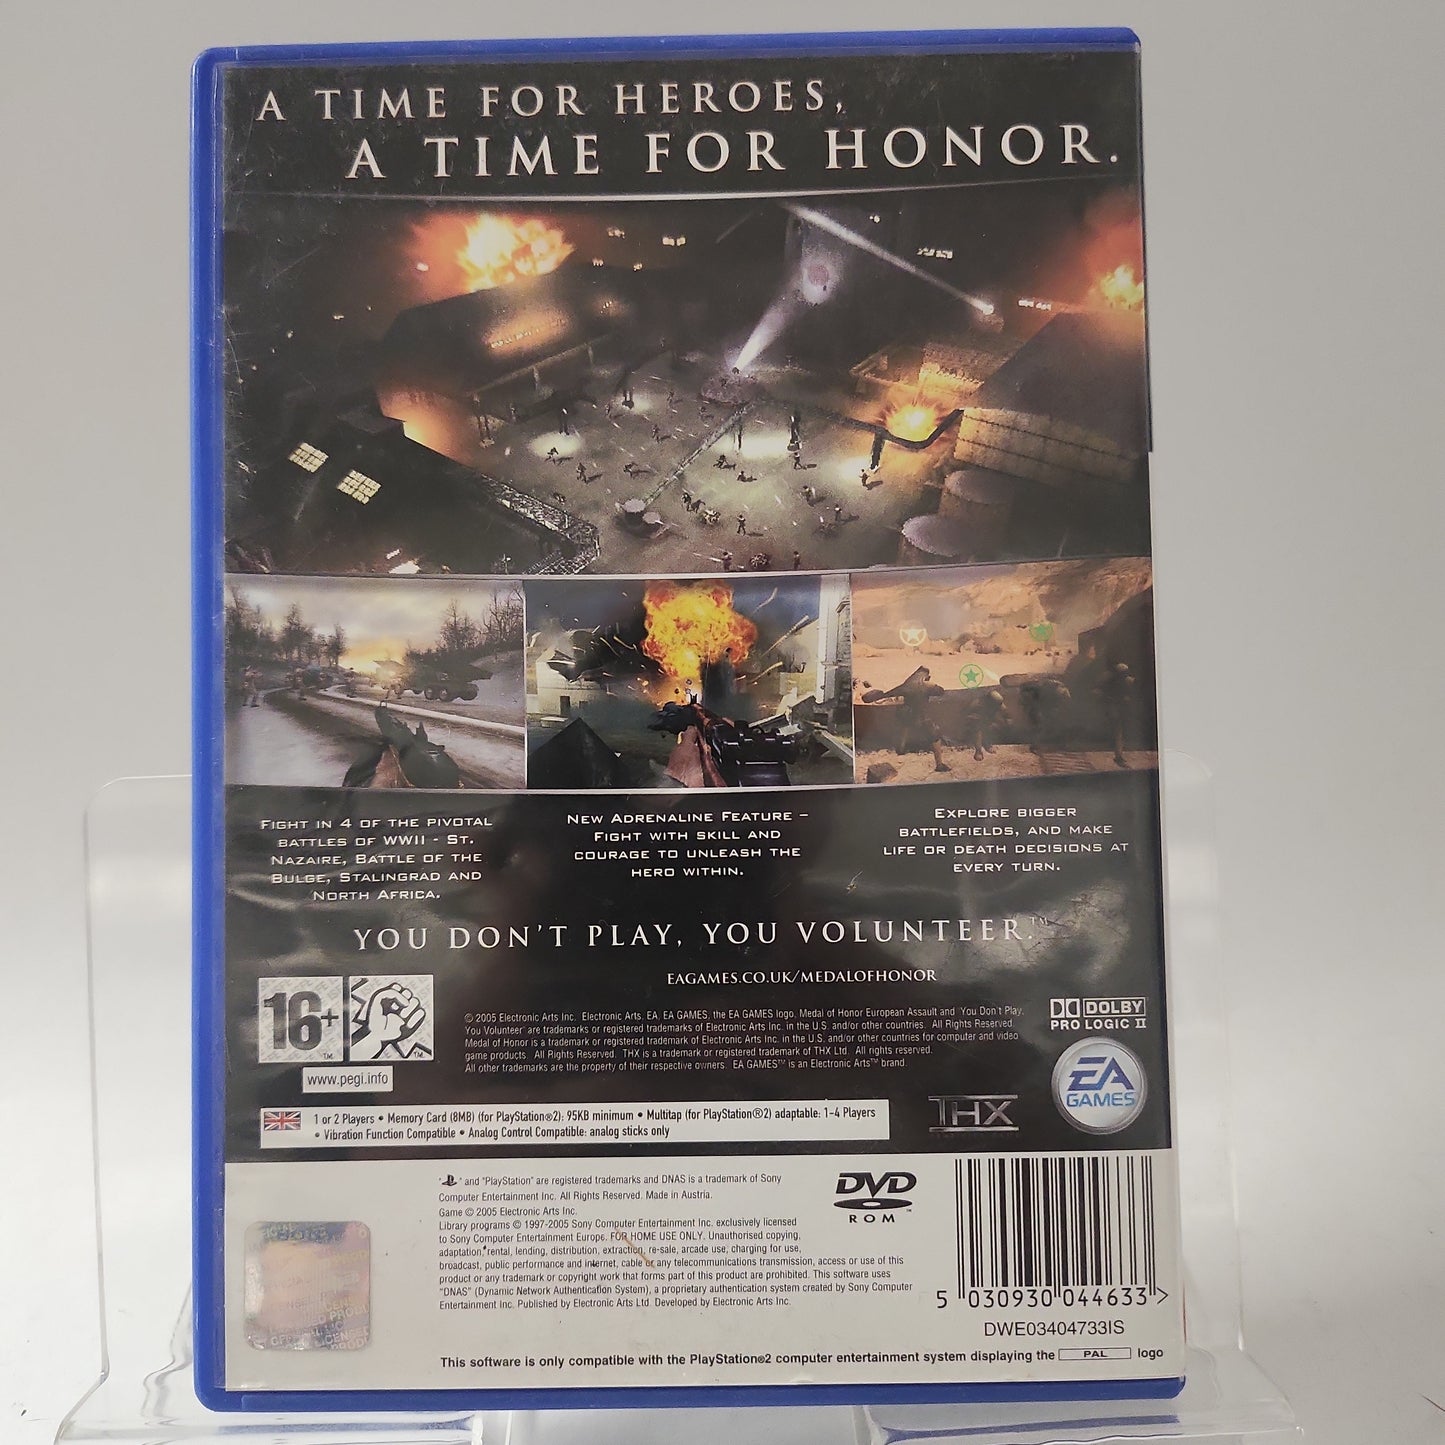 Medal of Honor European Assault (No Book) PlayStation 2